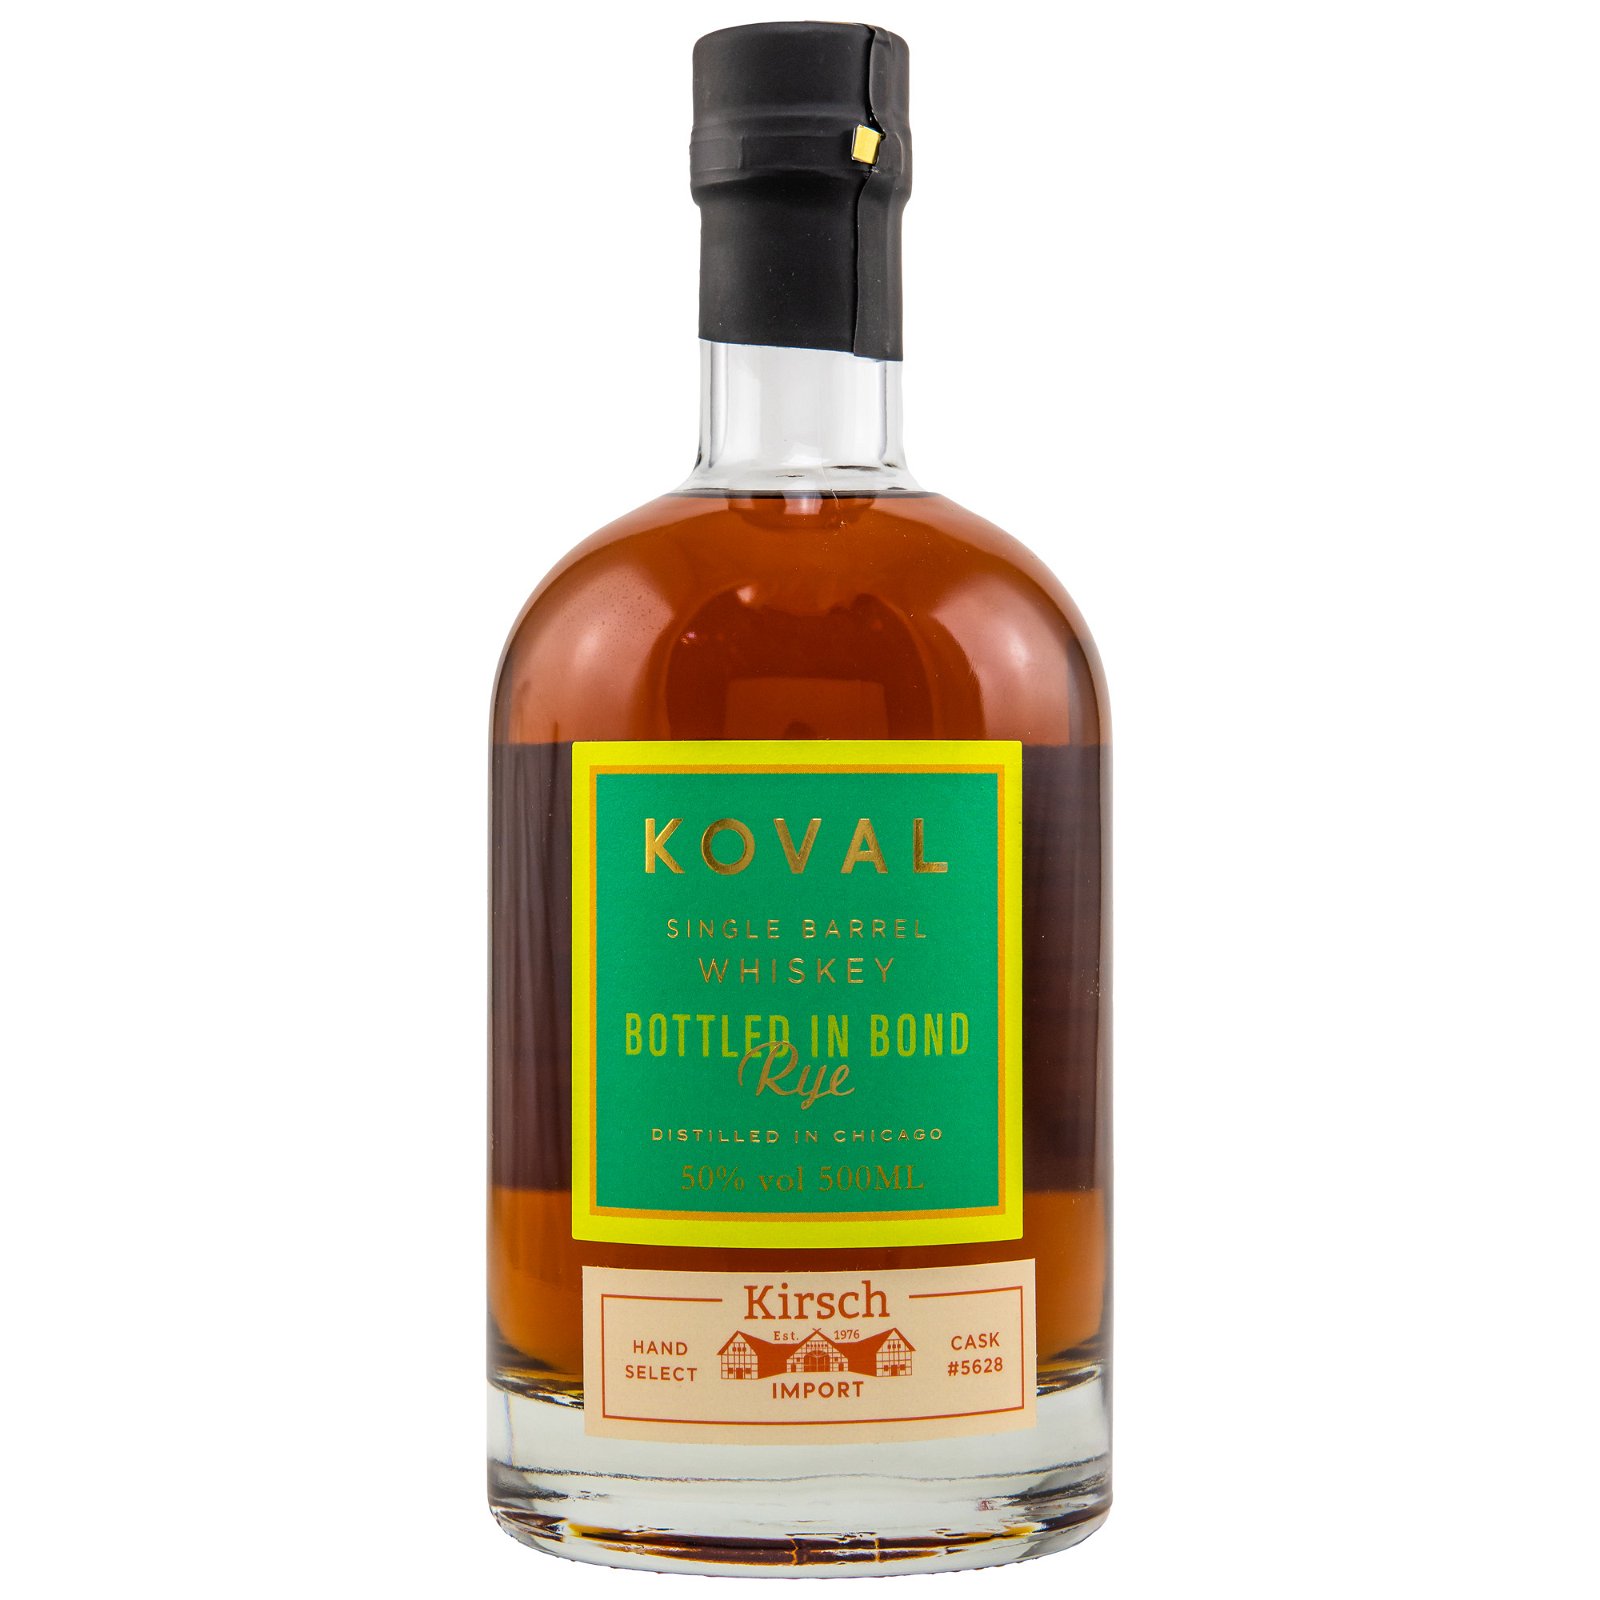 Koval Bottled in Bond Single Barrel No. 5628 Germany exclusive